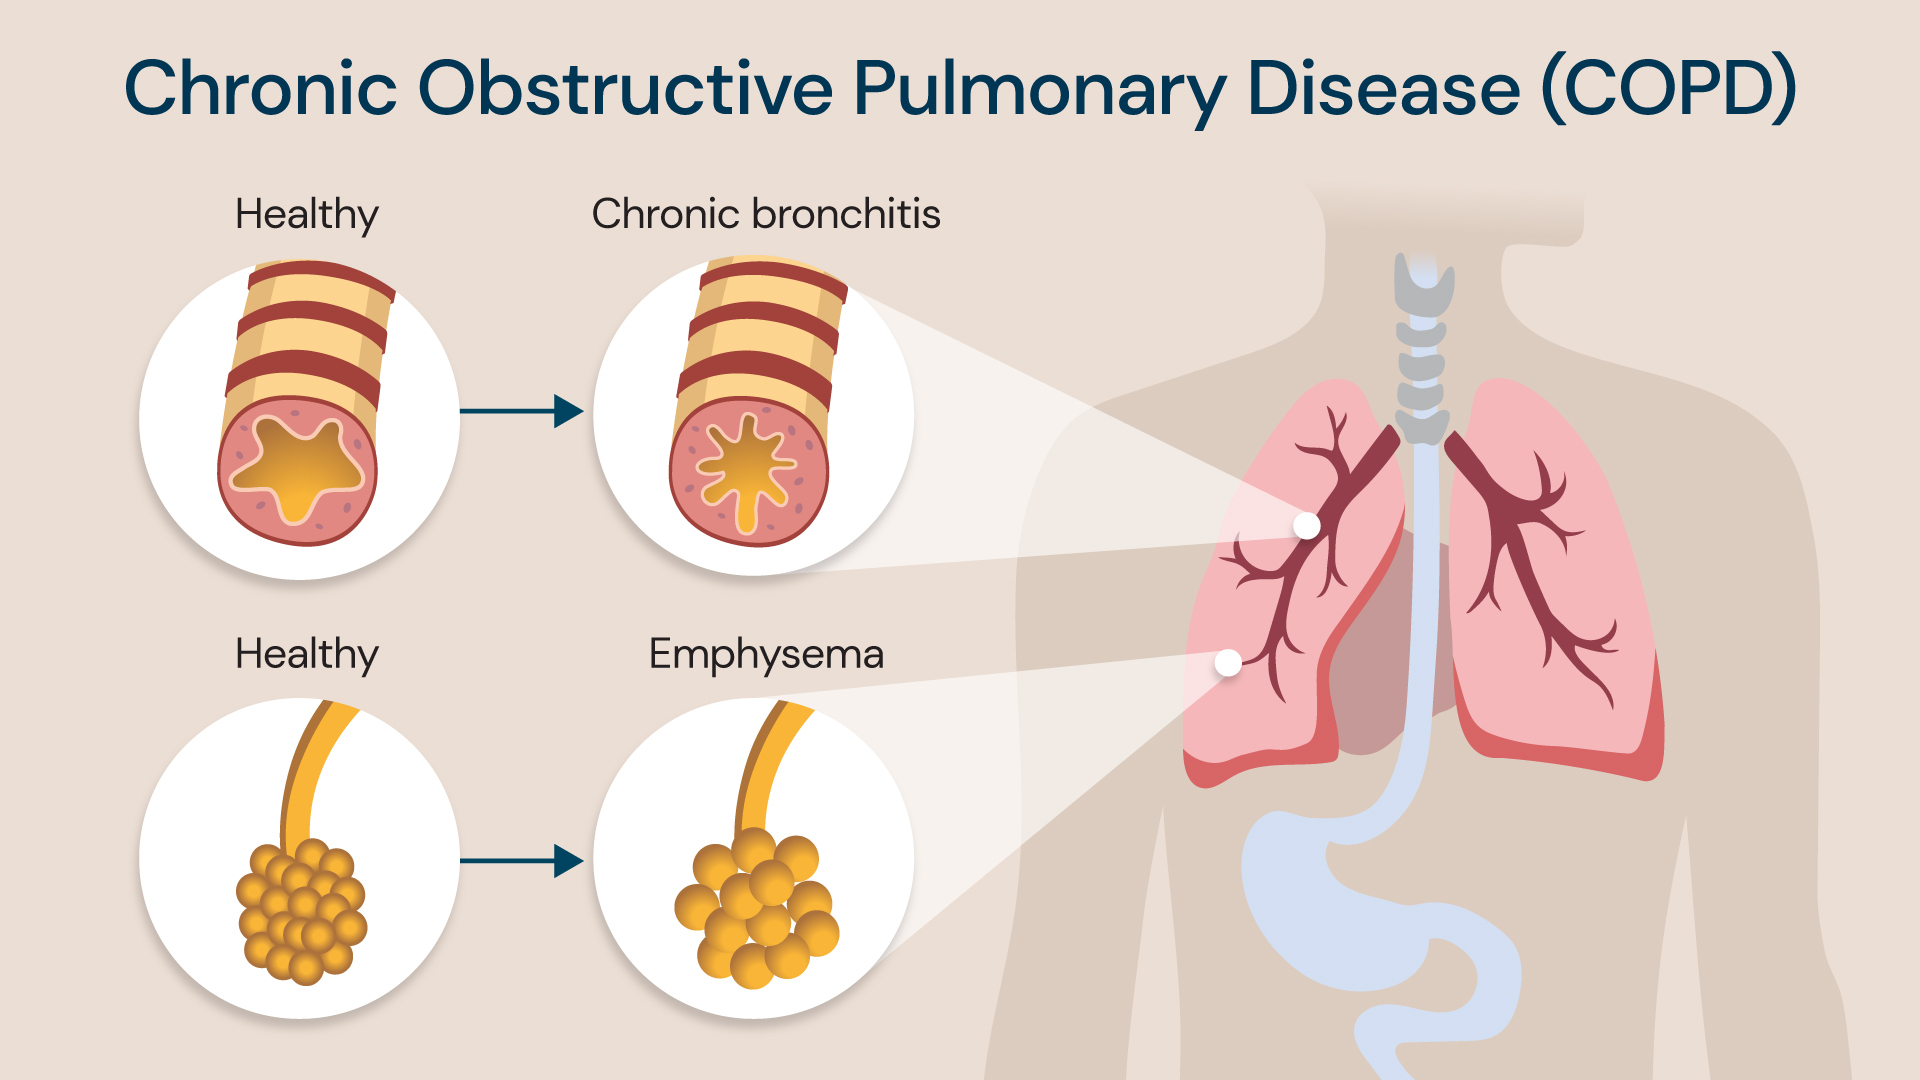 COPD chronic obstructive pulmonary disease